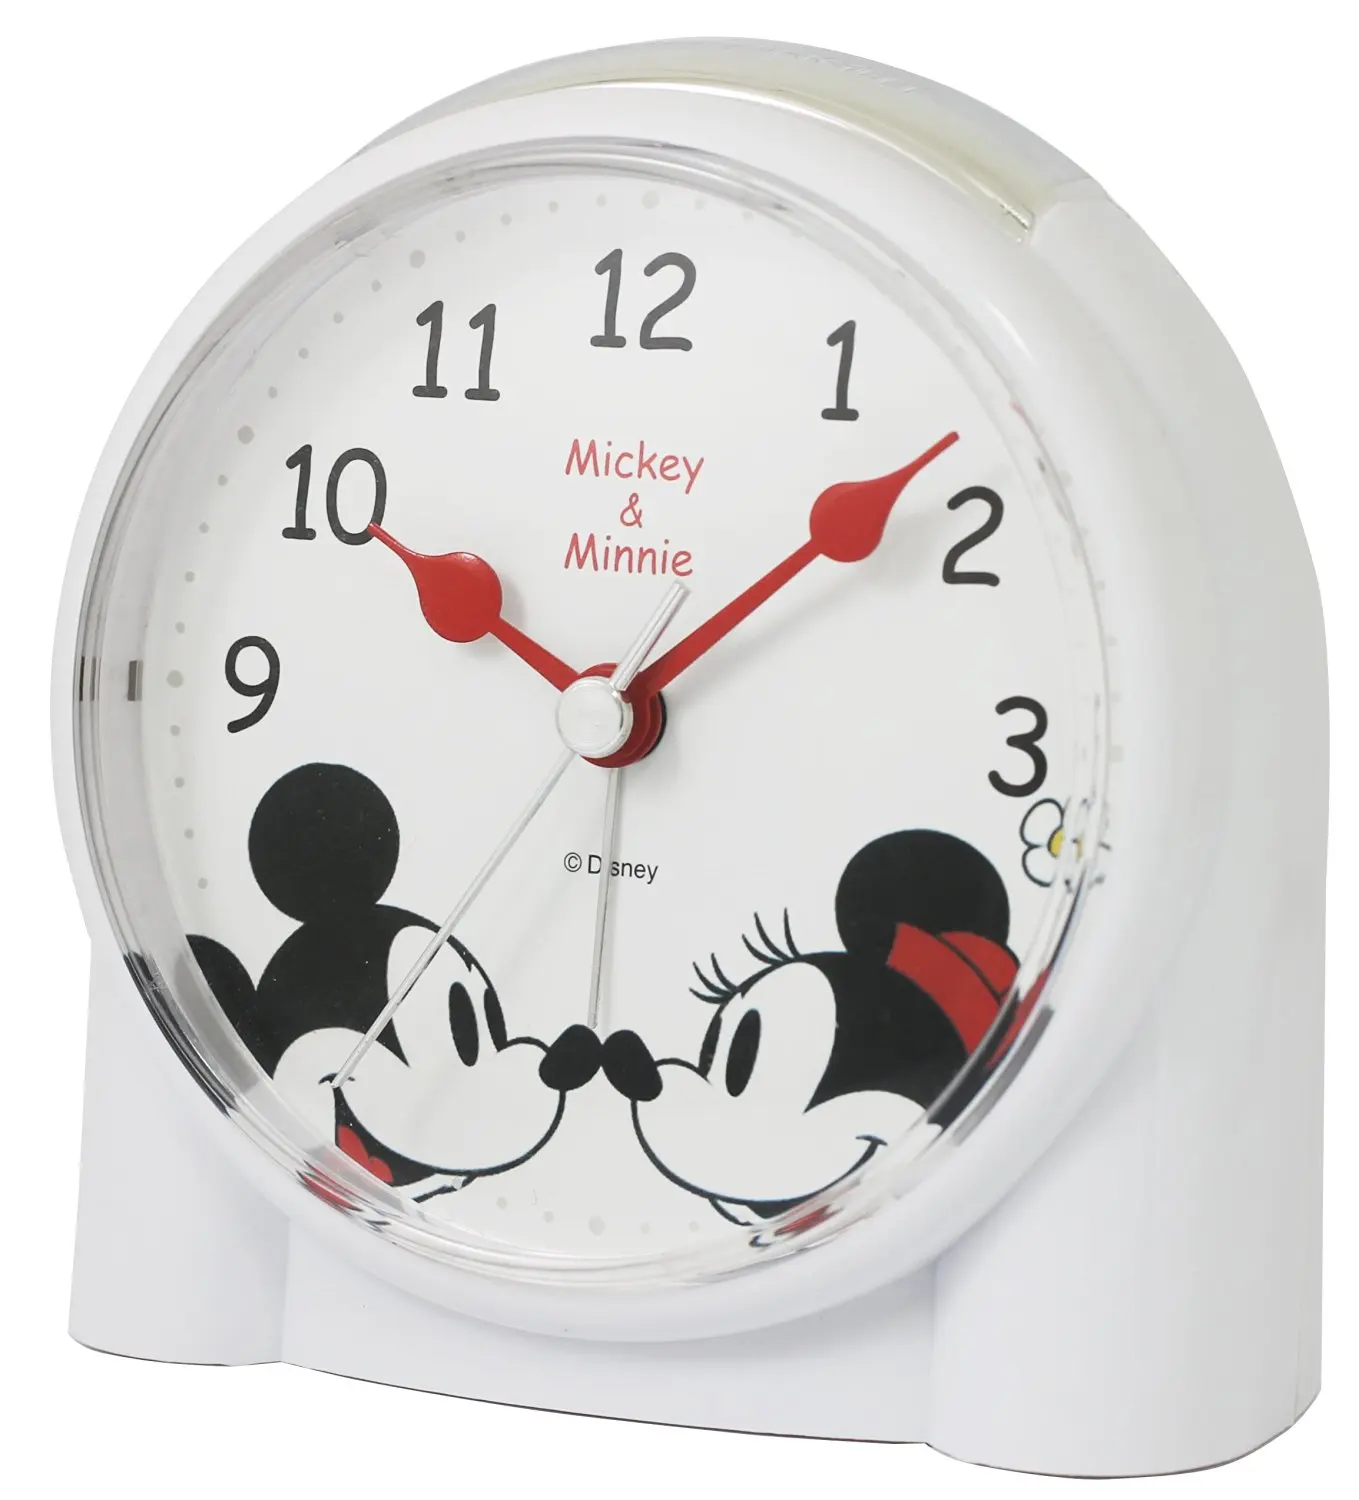 Buy Disney alarm clock Lilo and Stitch analog display